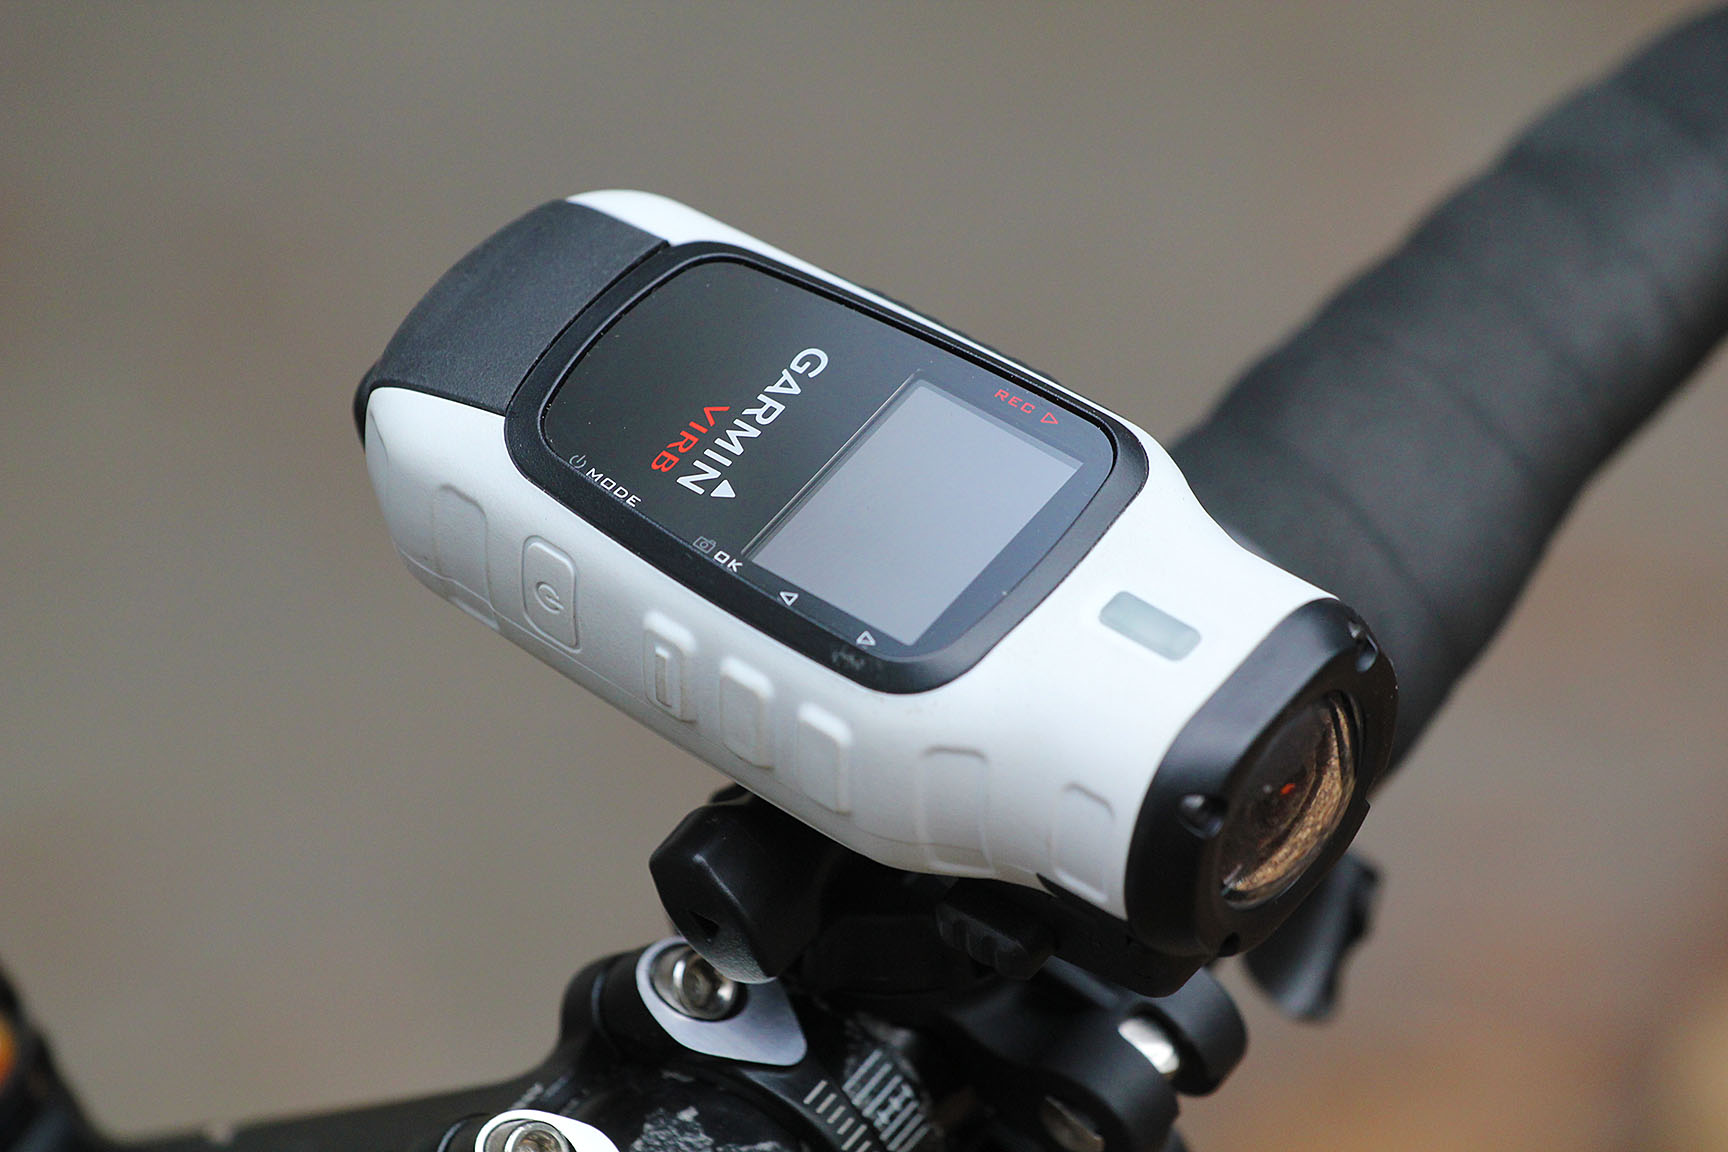 garmin bicycle camera